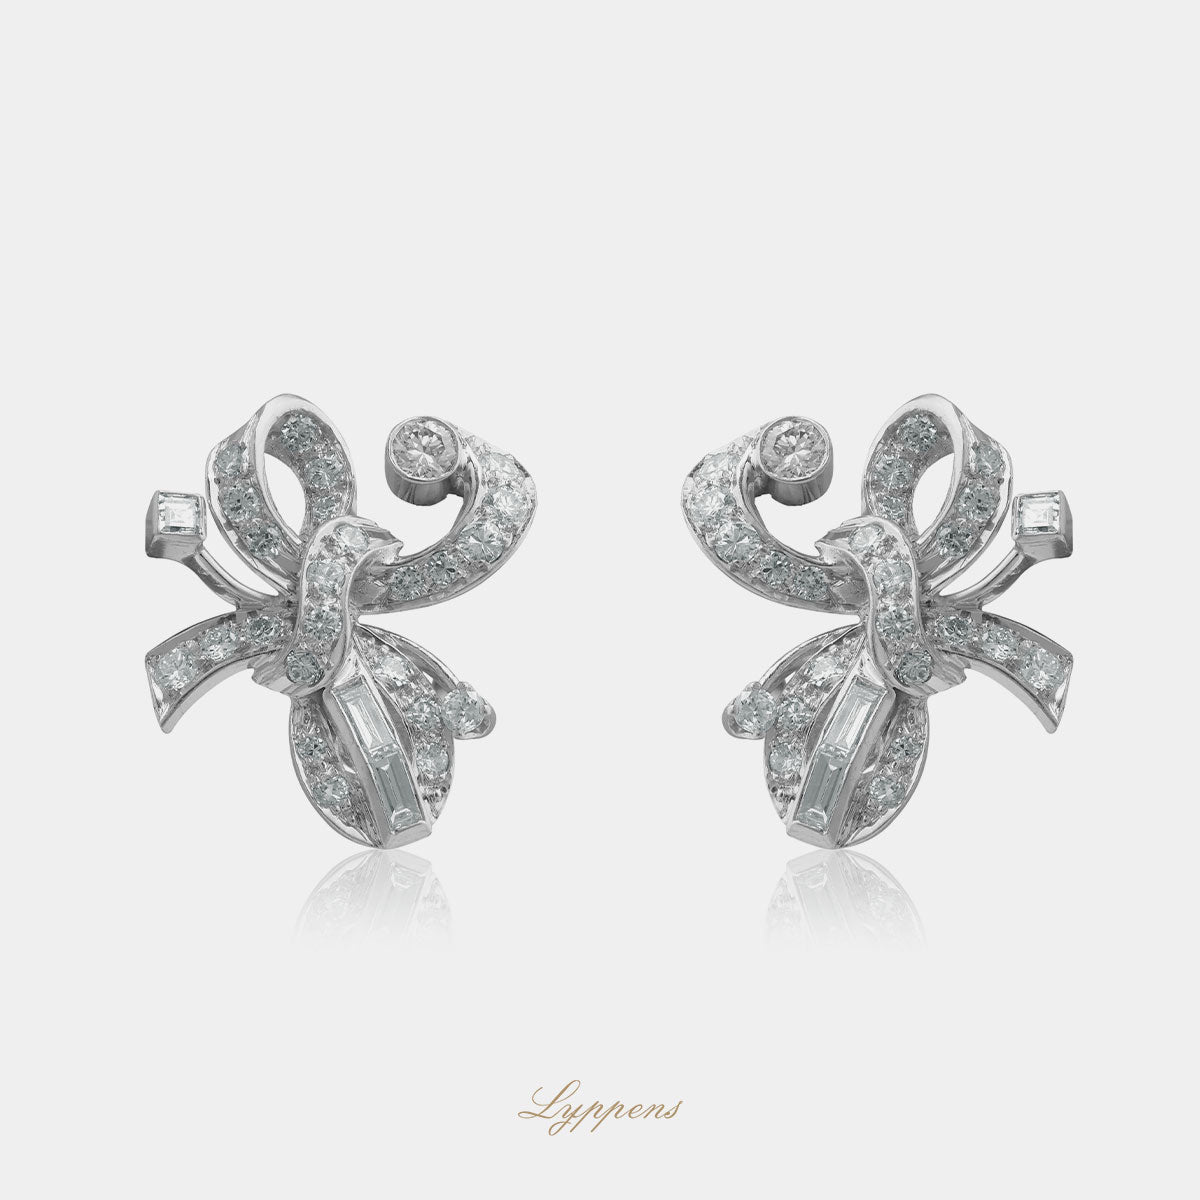 White gold and platinum Art Deco diamond earrings